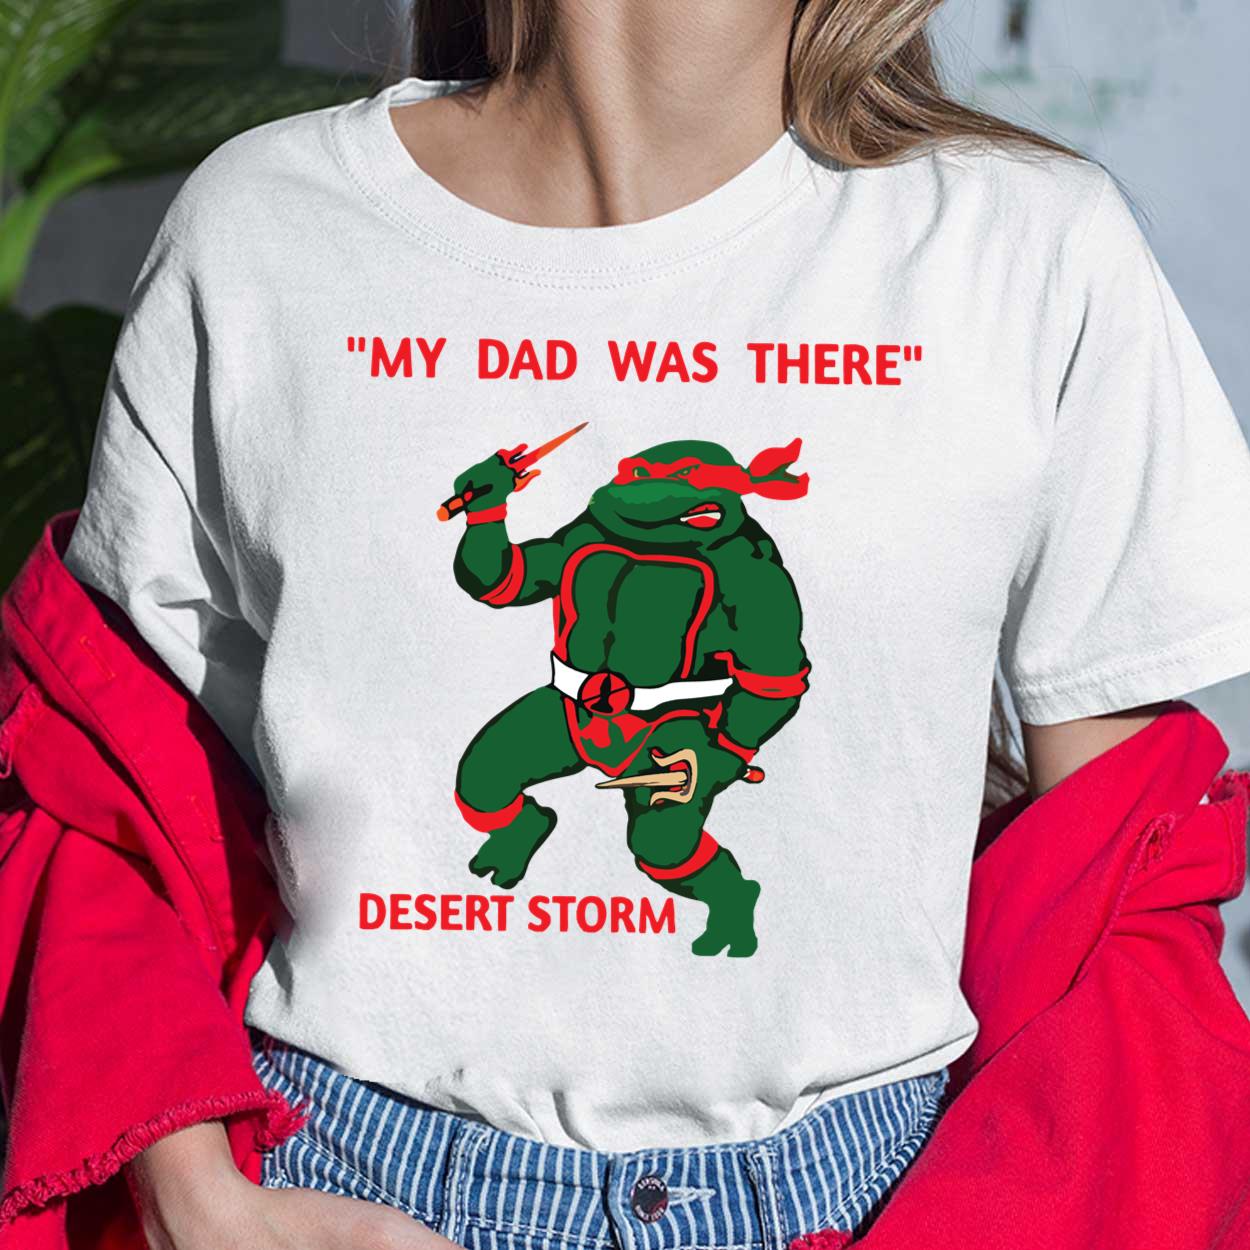 https://www.lelemoon.com/wp-content/uploads/2023/05/Raphael-Turtle-My-Dad-was-there-desert-storm-shirt-3.jpg